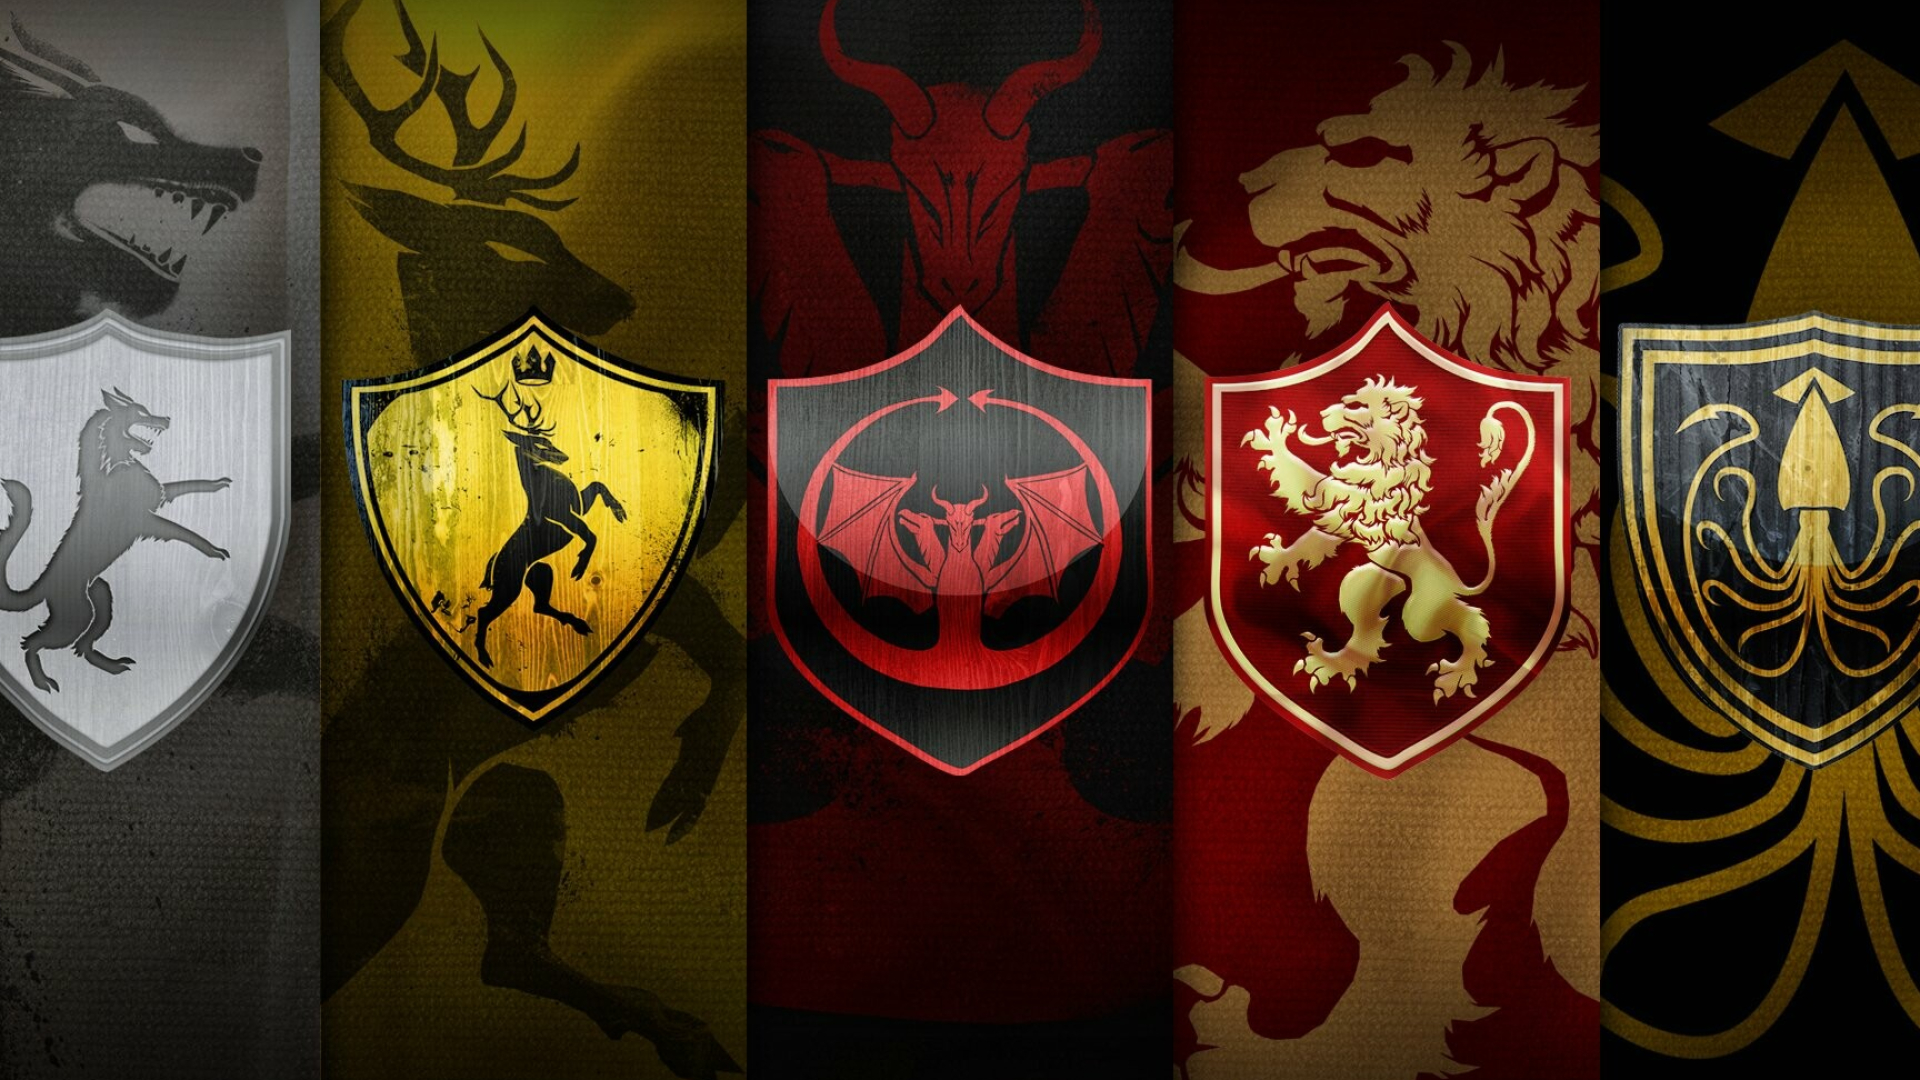 Game of Thrones: House Stark, House Lannister, House Greyjoy, House Baratheon. 1920x1080 Full HD Wallpaper.